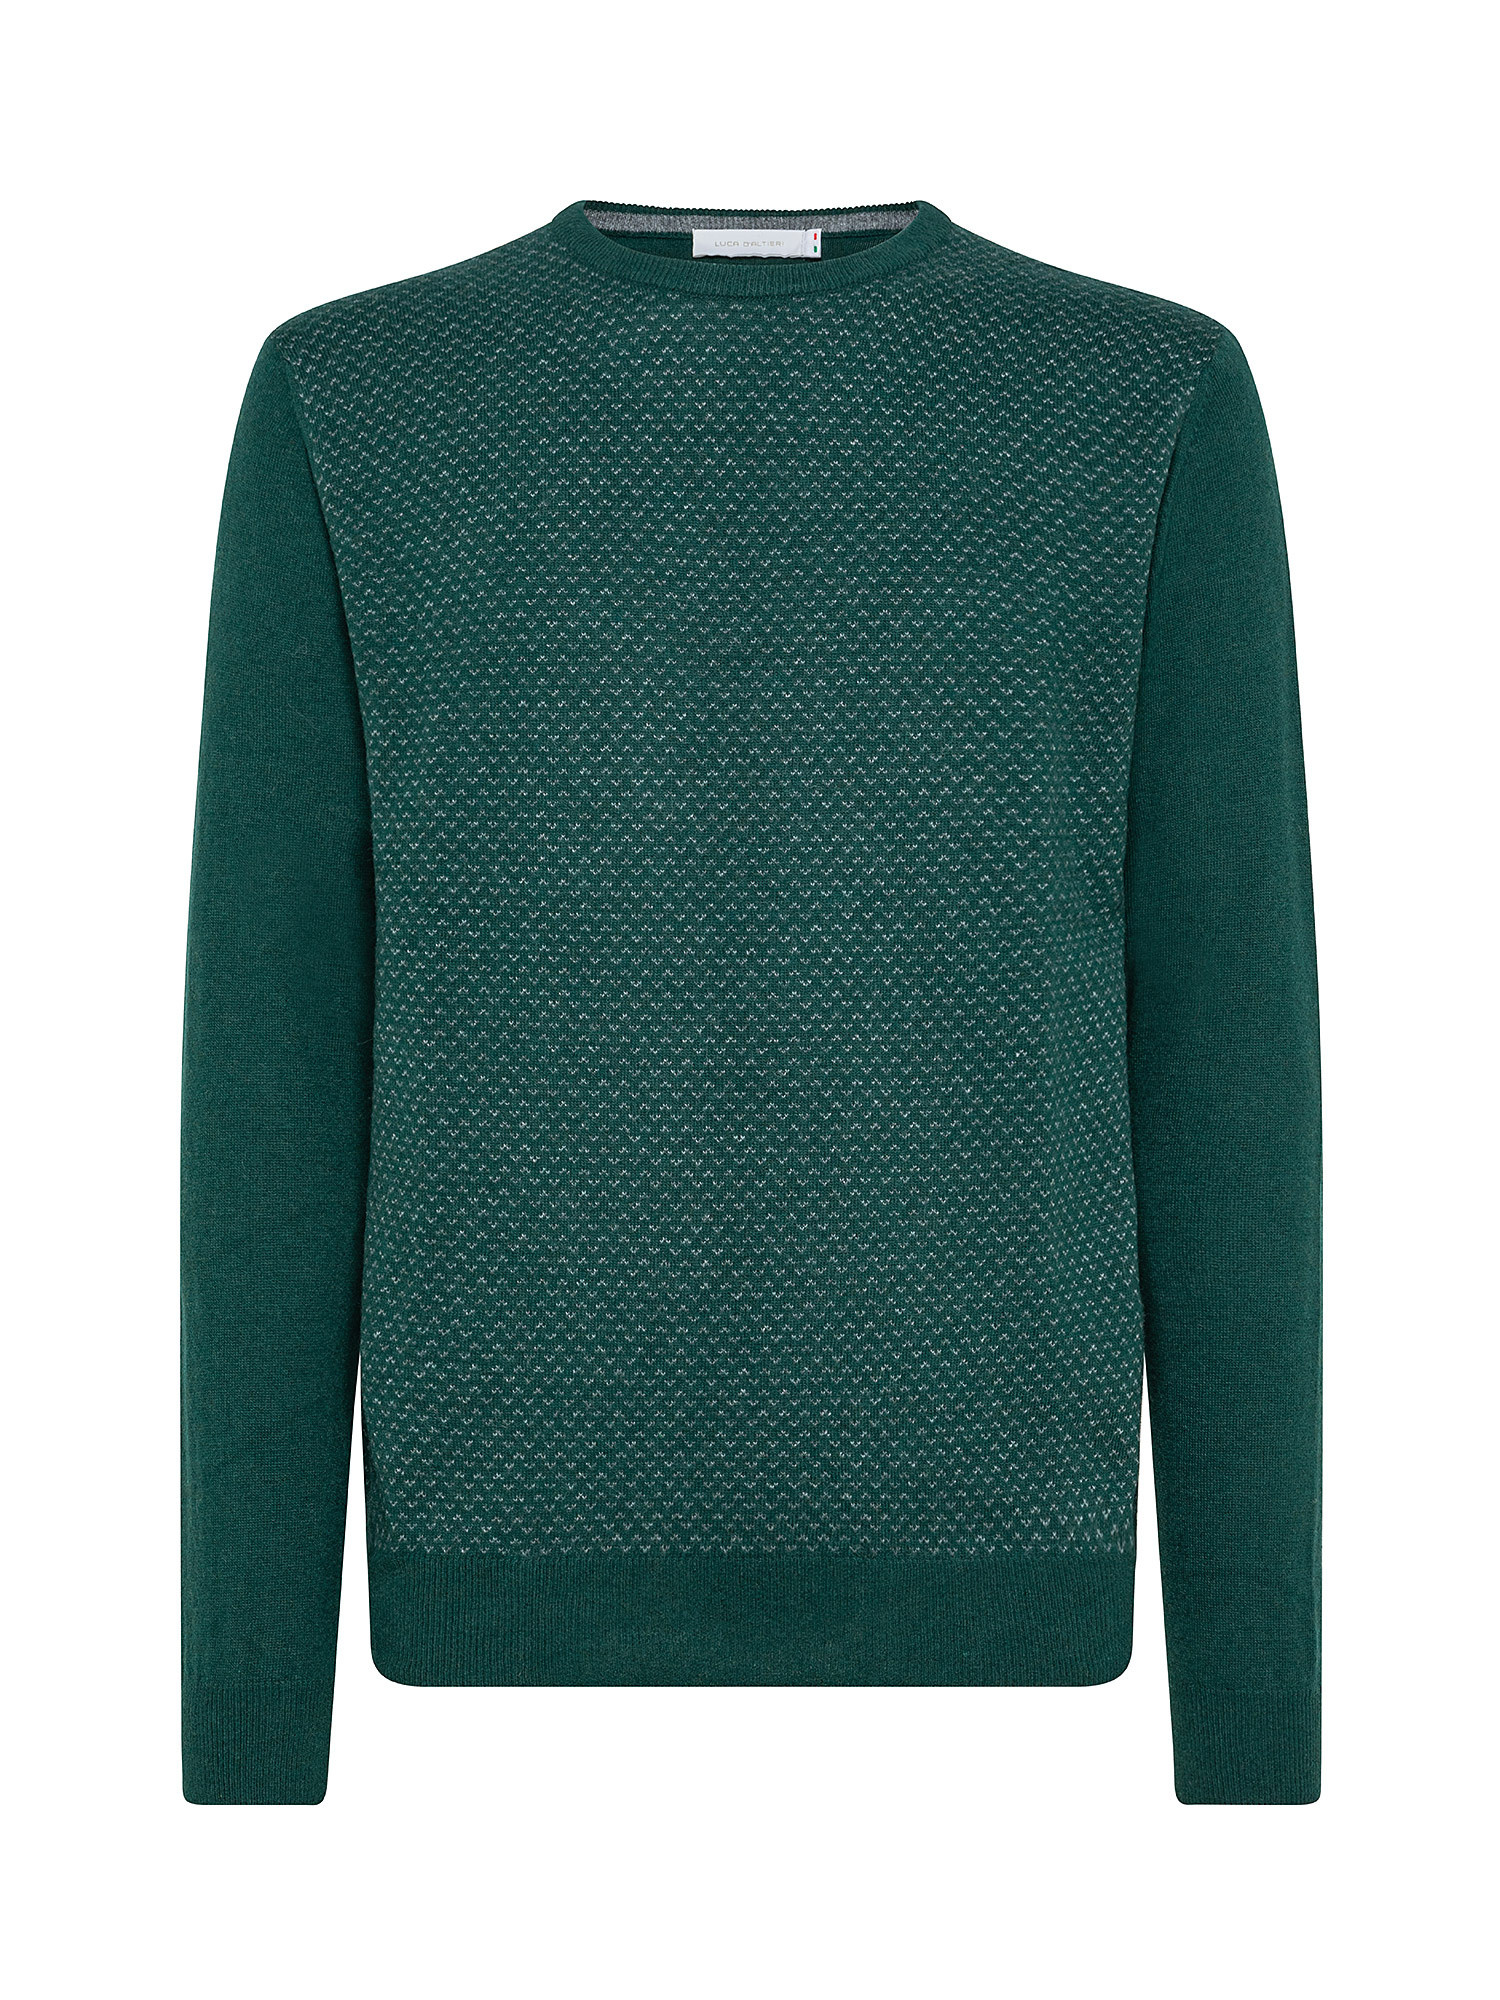 Basic crewneck pullover, Green, large image number 0